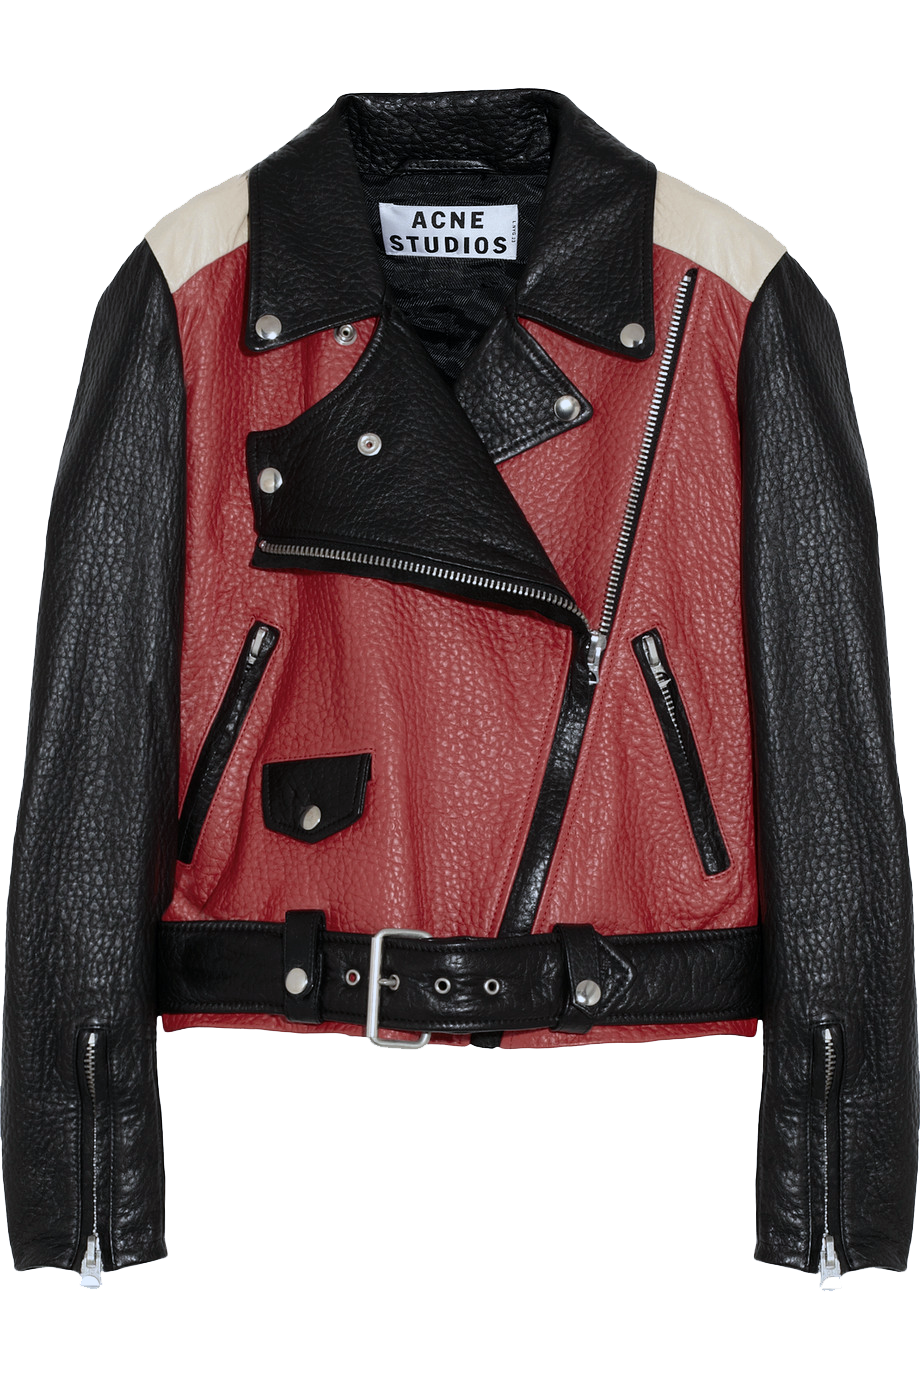 Acne Studios Black Red pebbled leather Merci biker jacket open